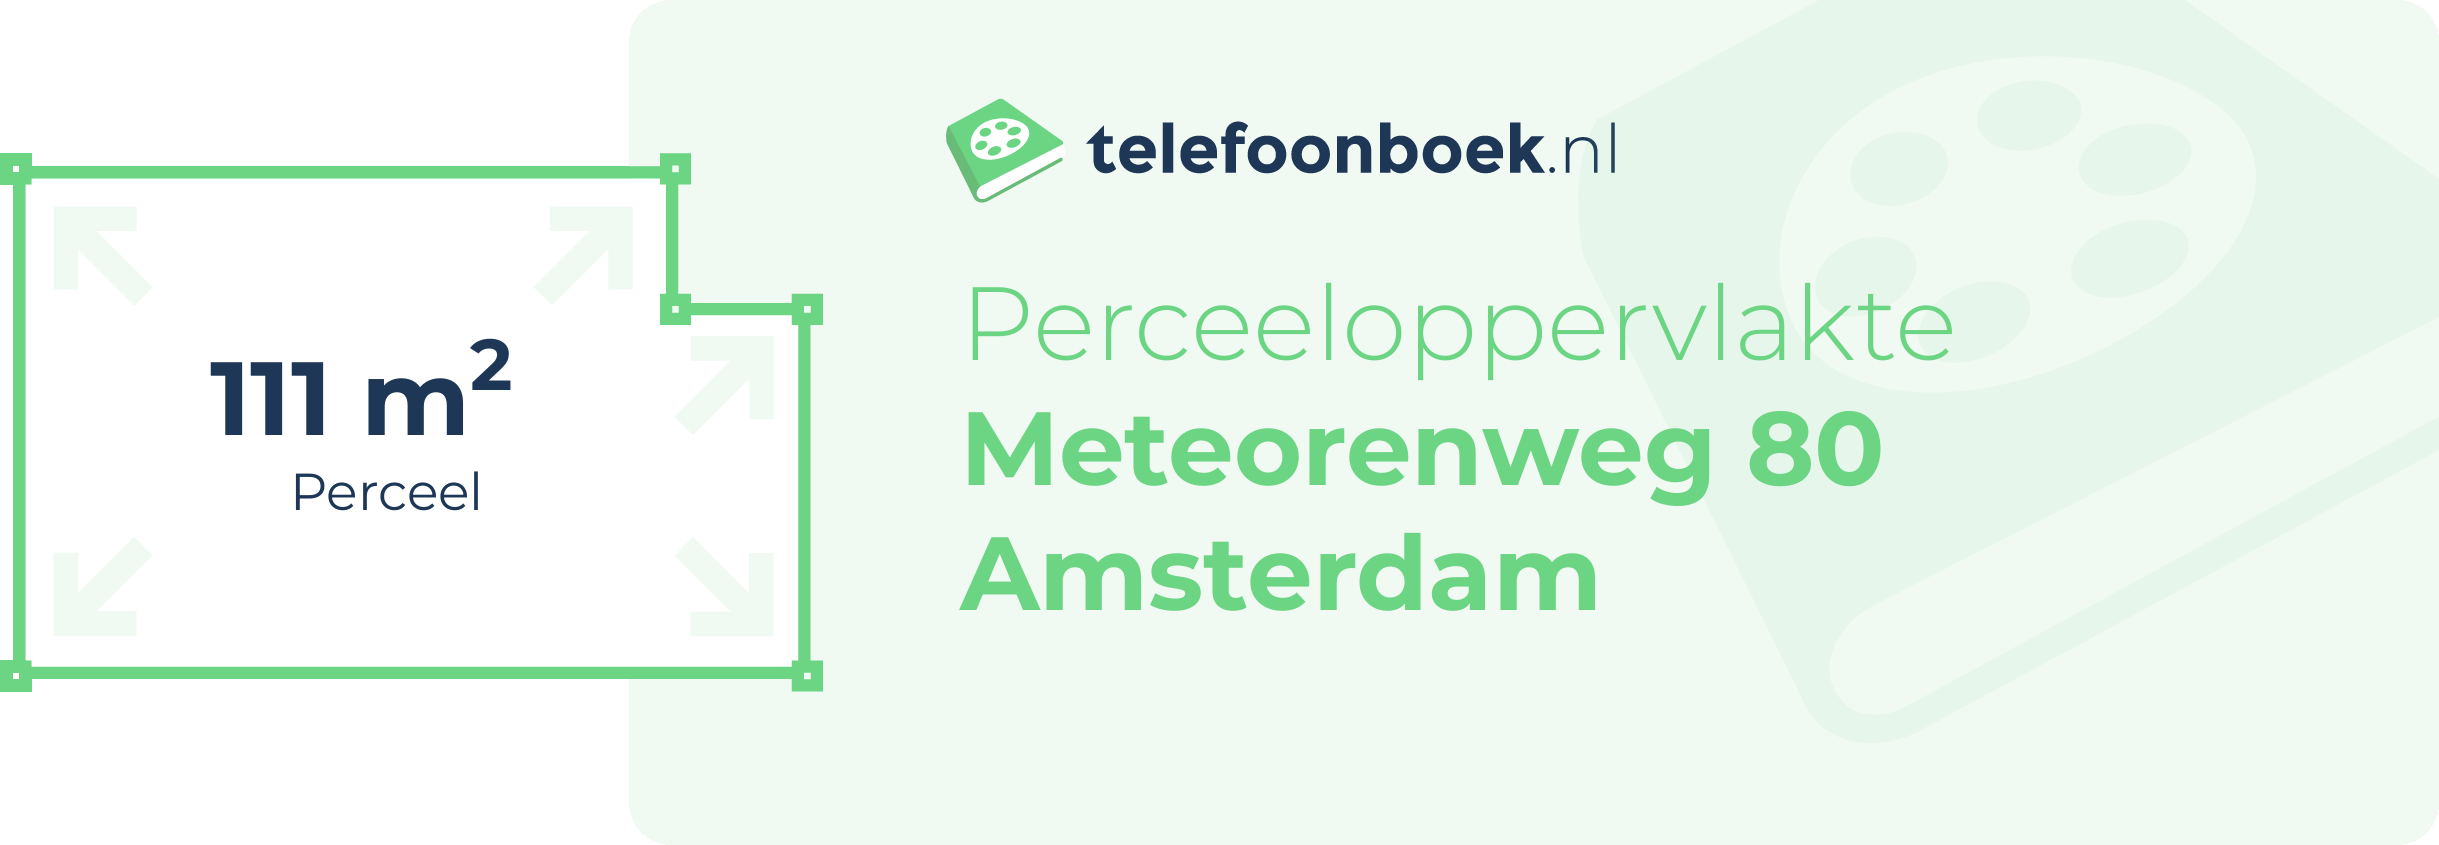 Perceeloppervlakte Meteorenweg 80 Amsterdam